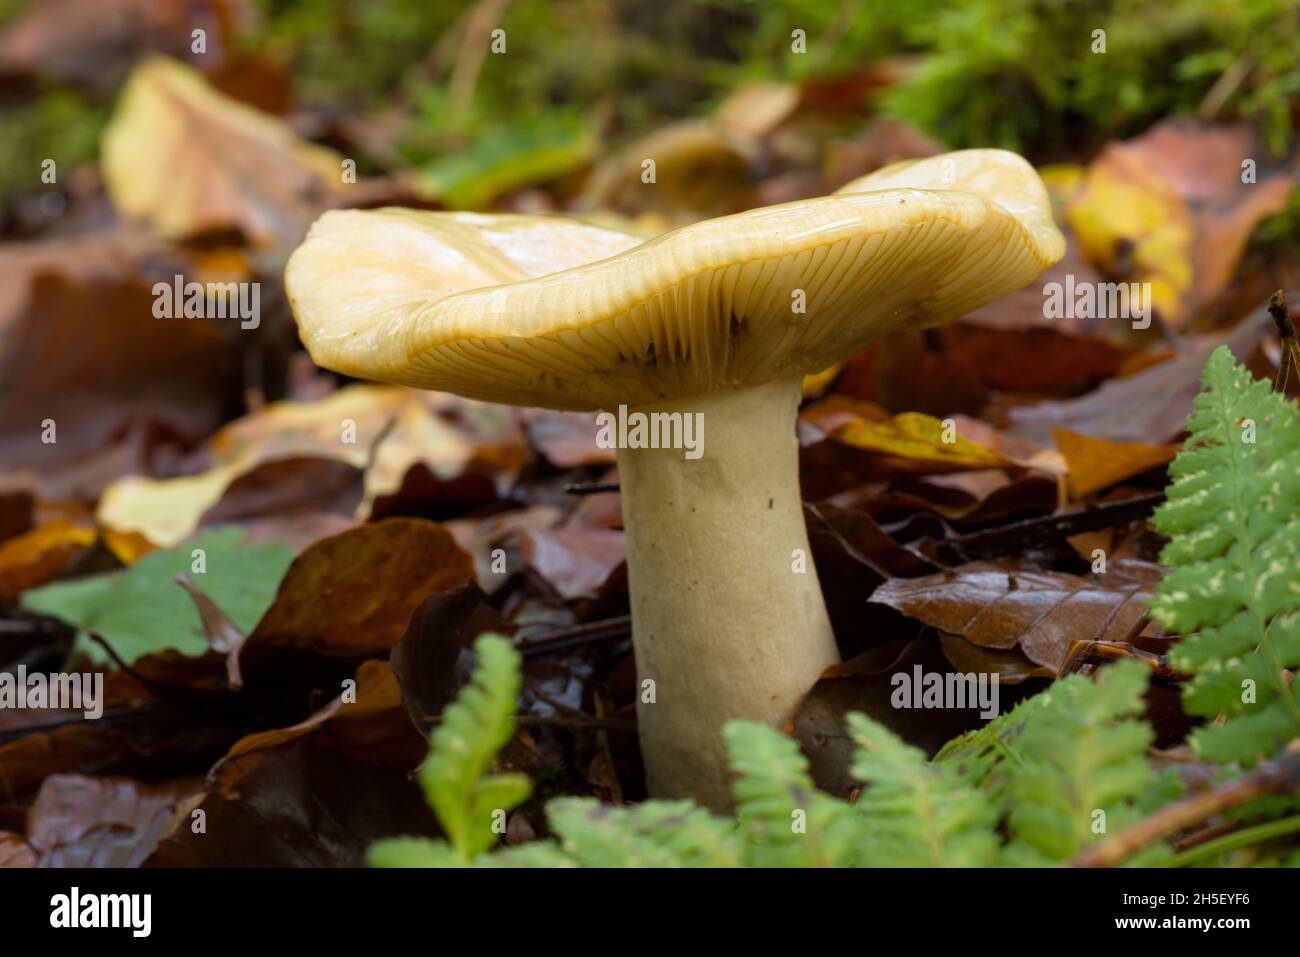 Ochre Brittlegill (Russula ochroleuca) mushroom growing in the leaf litter of a woodland at Beacon Hill in the Mendip Hills, Somerset, England. Stock Photo